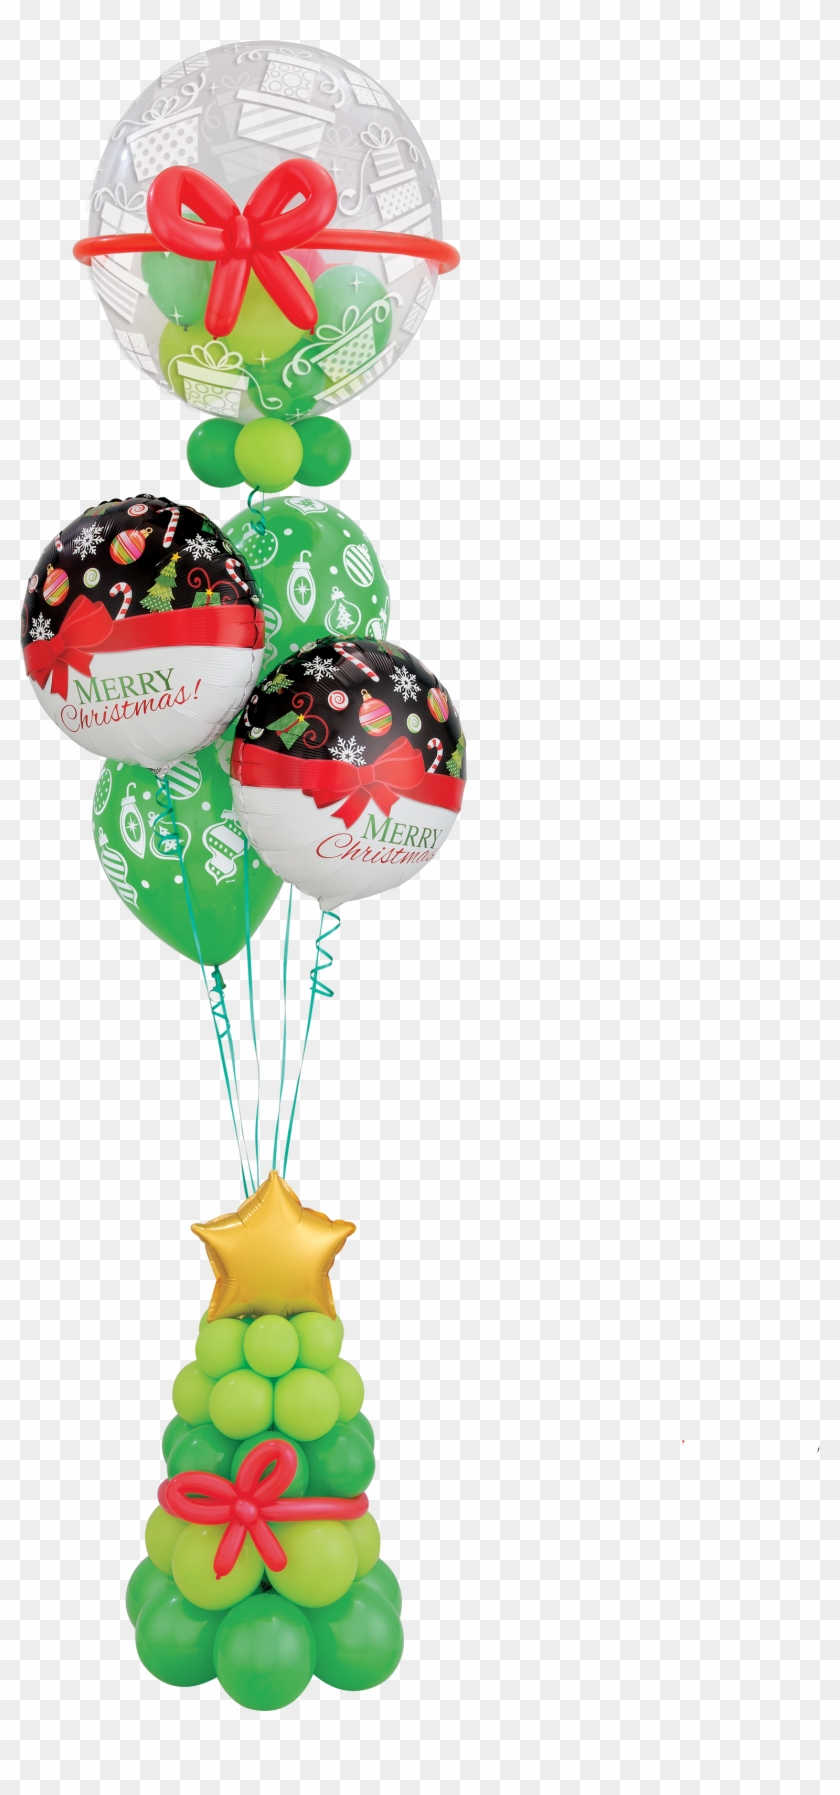 Merry Christmas Tree Balloon Bouquet - Balloon Clipart #5995341